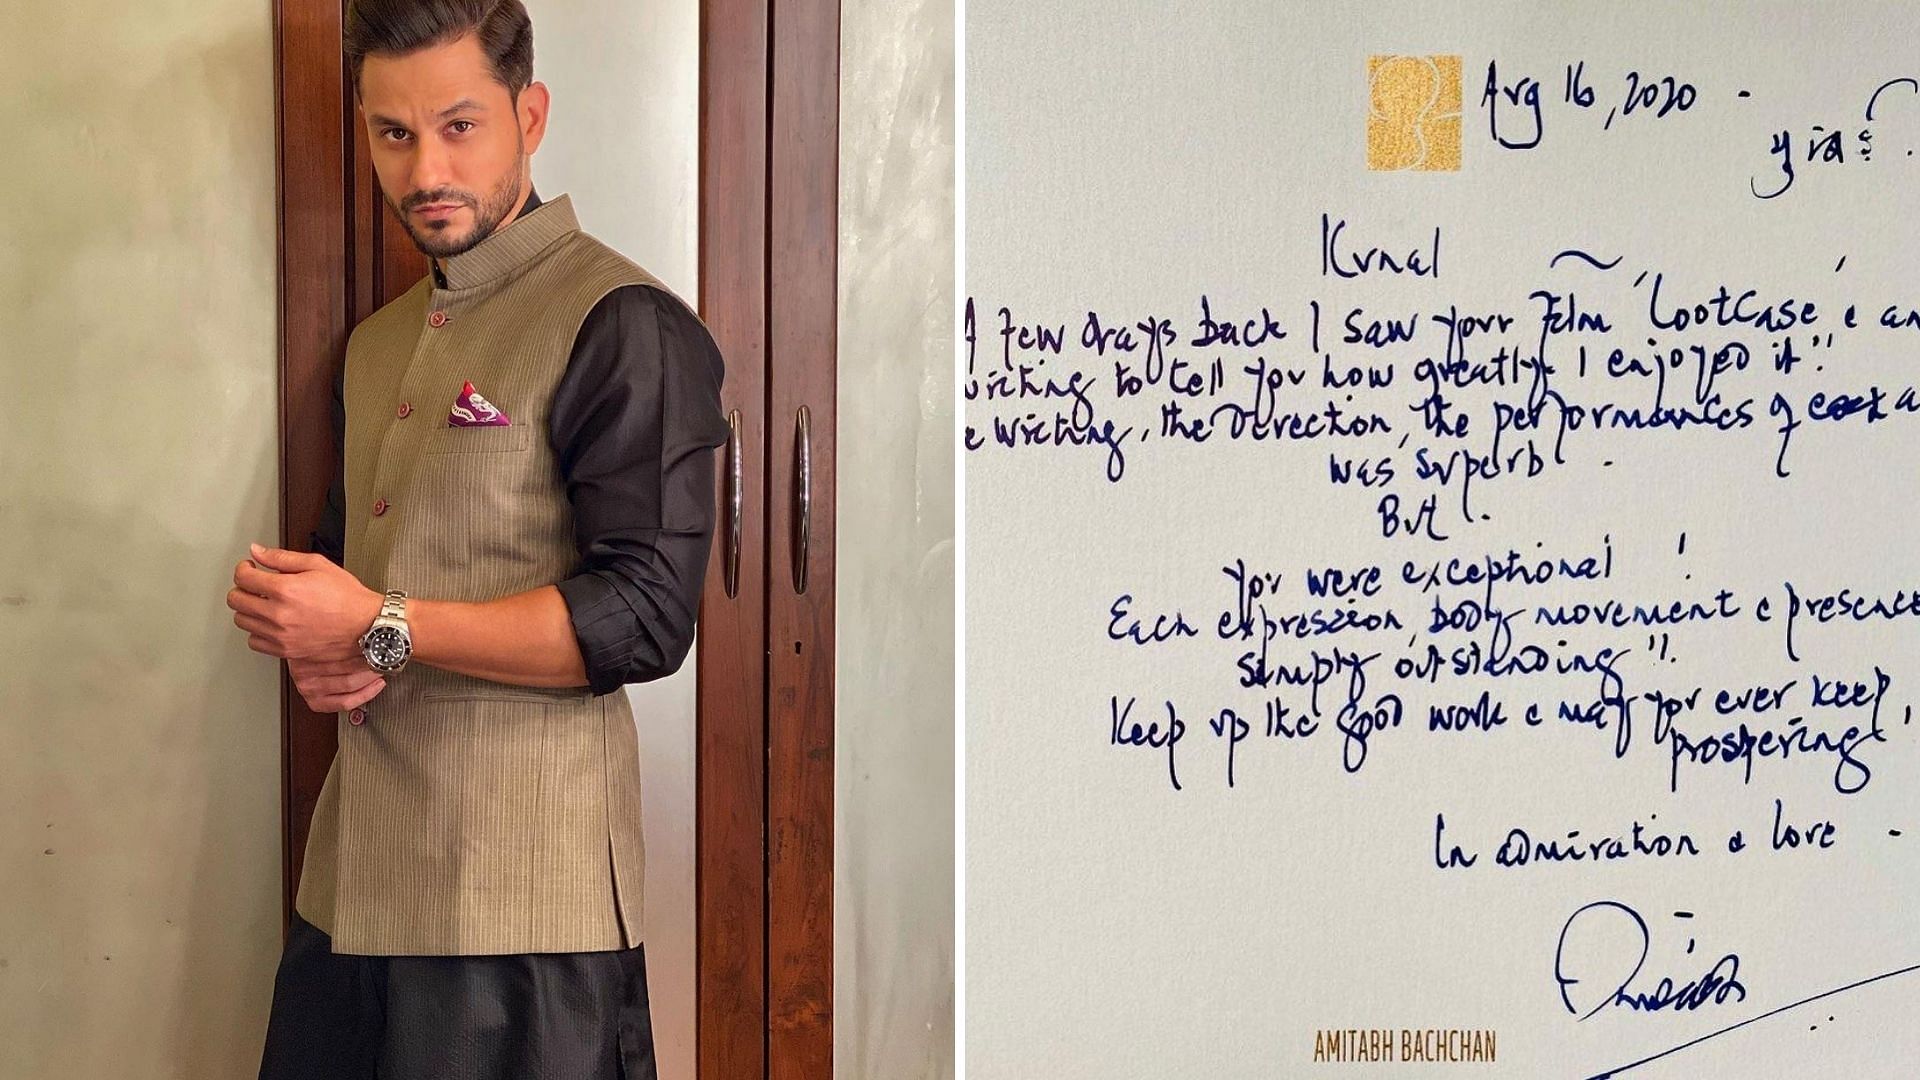 Kunal Kemmu received a handwritten note from Amitabh Bachchan.